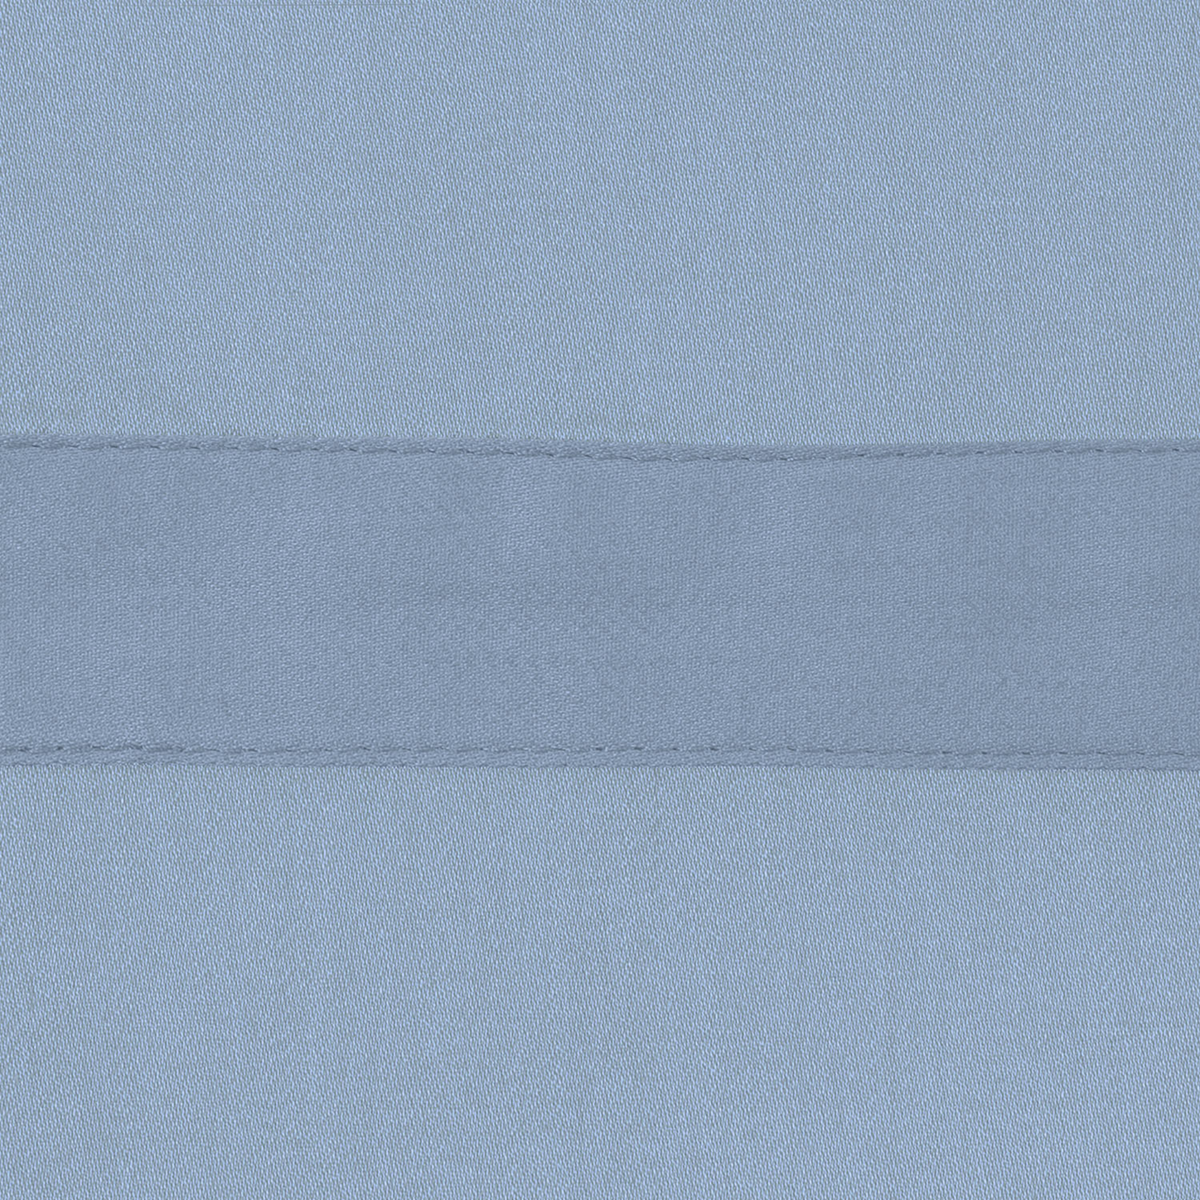 Fabric Closeup of Matouk Nocturne Collection Hazy Blue Color